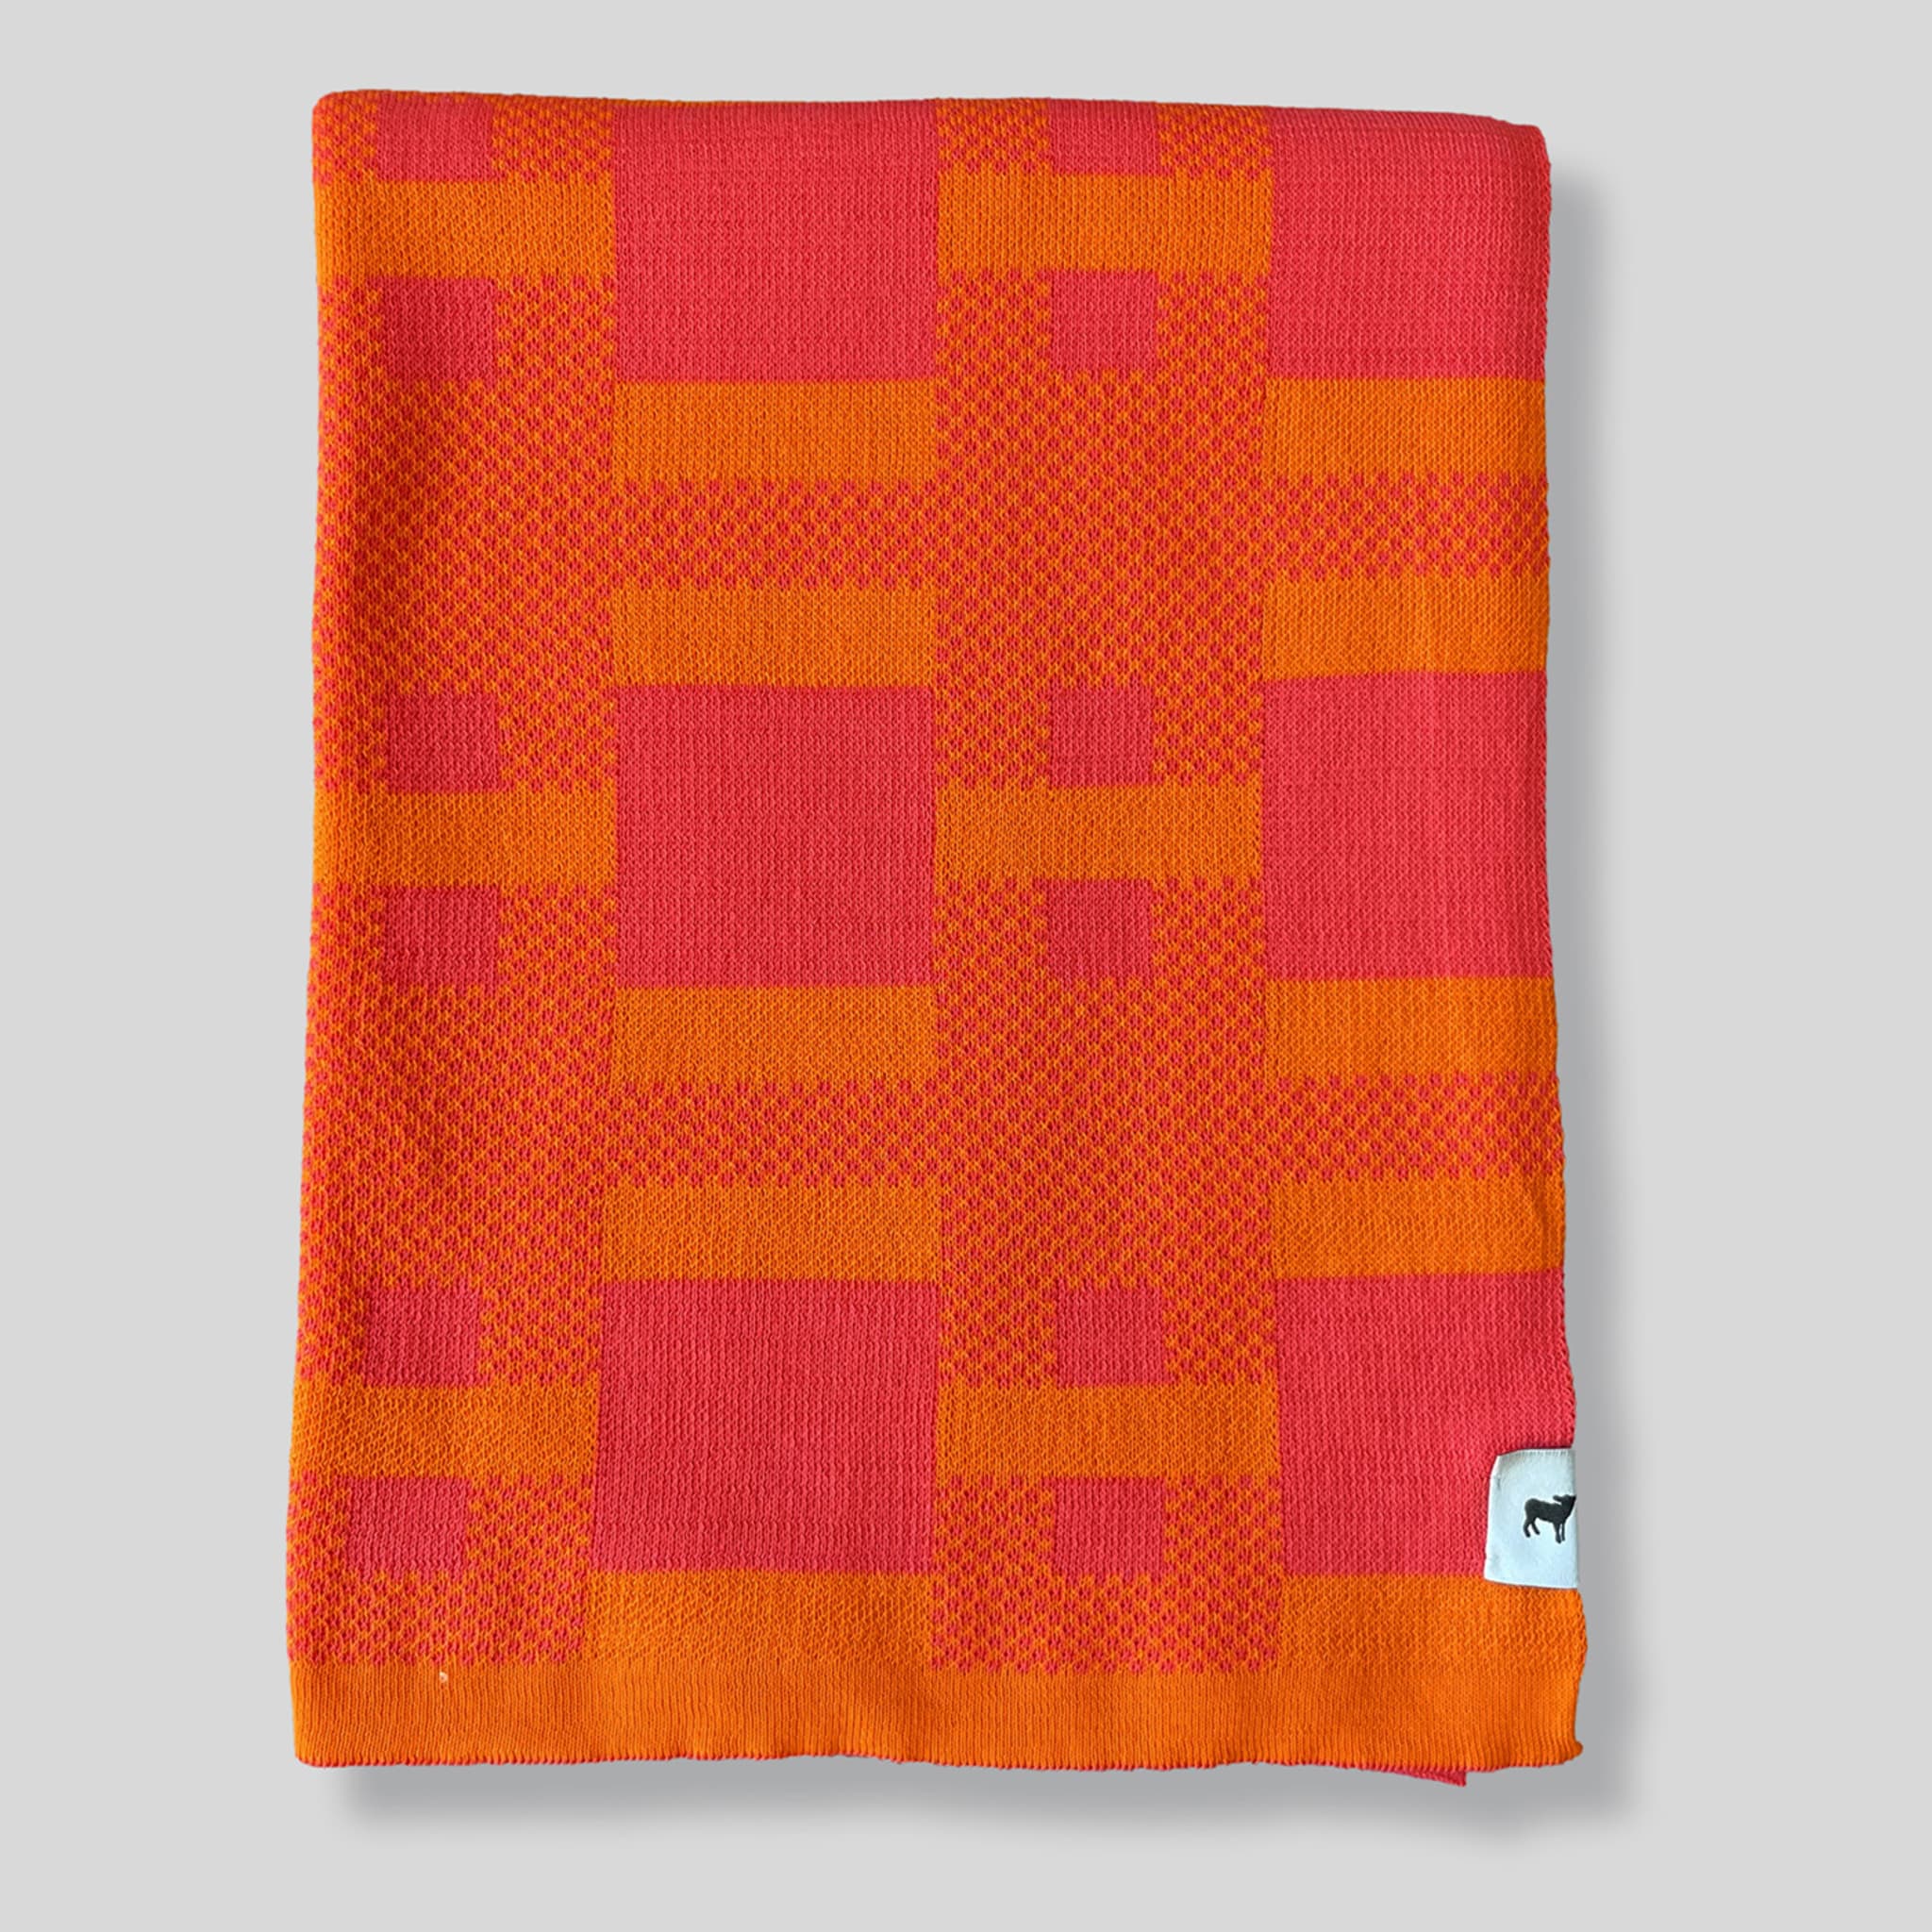 Plusminus Bio Orange Blanket by Angela Lorenz - Alternative view 3